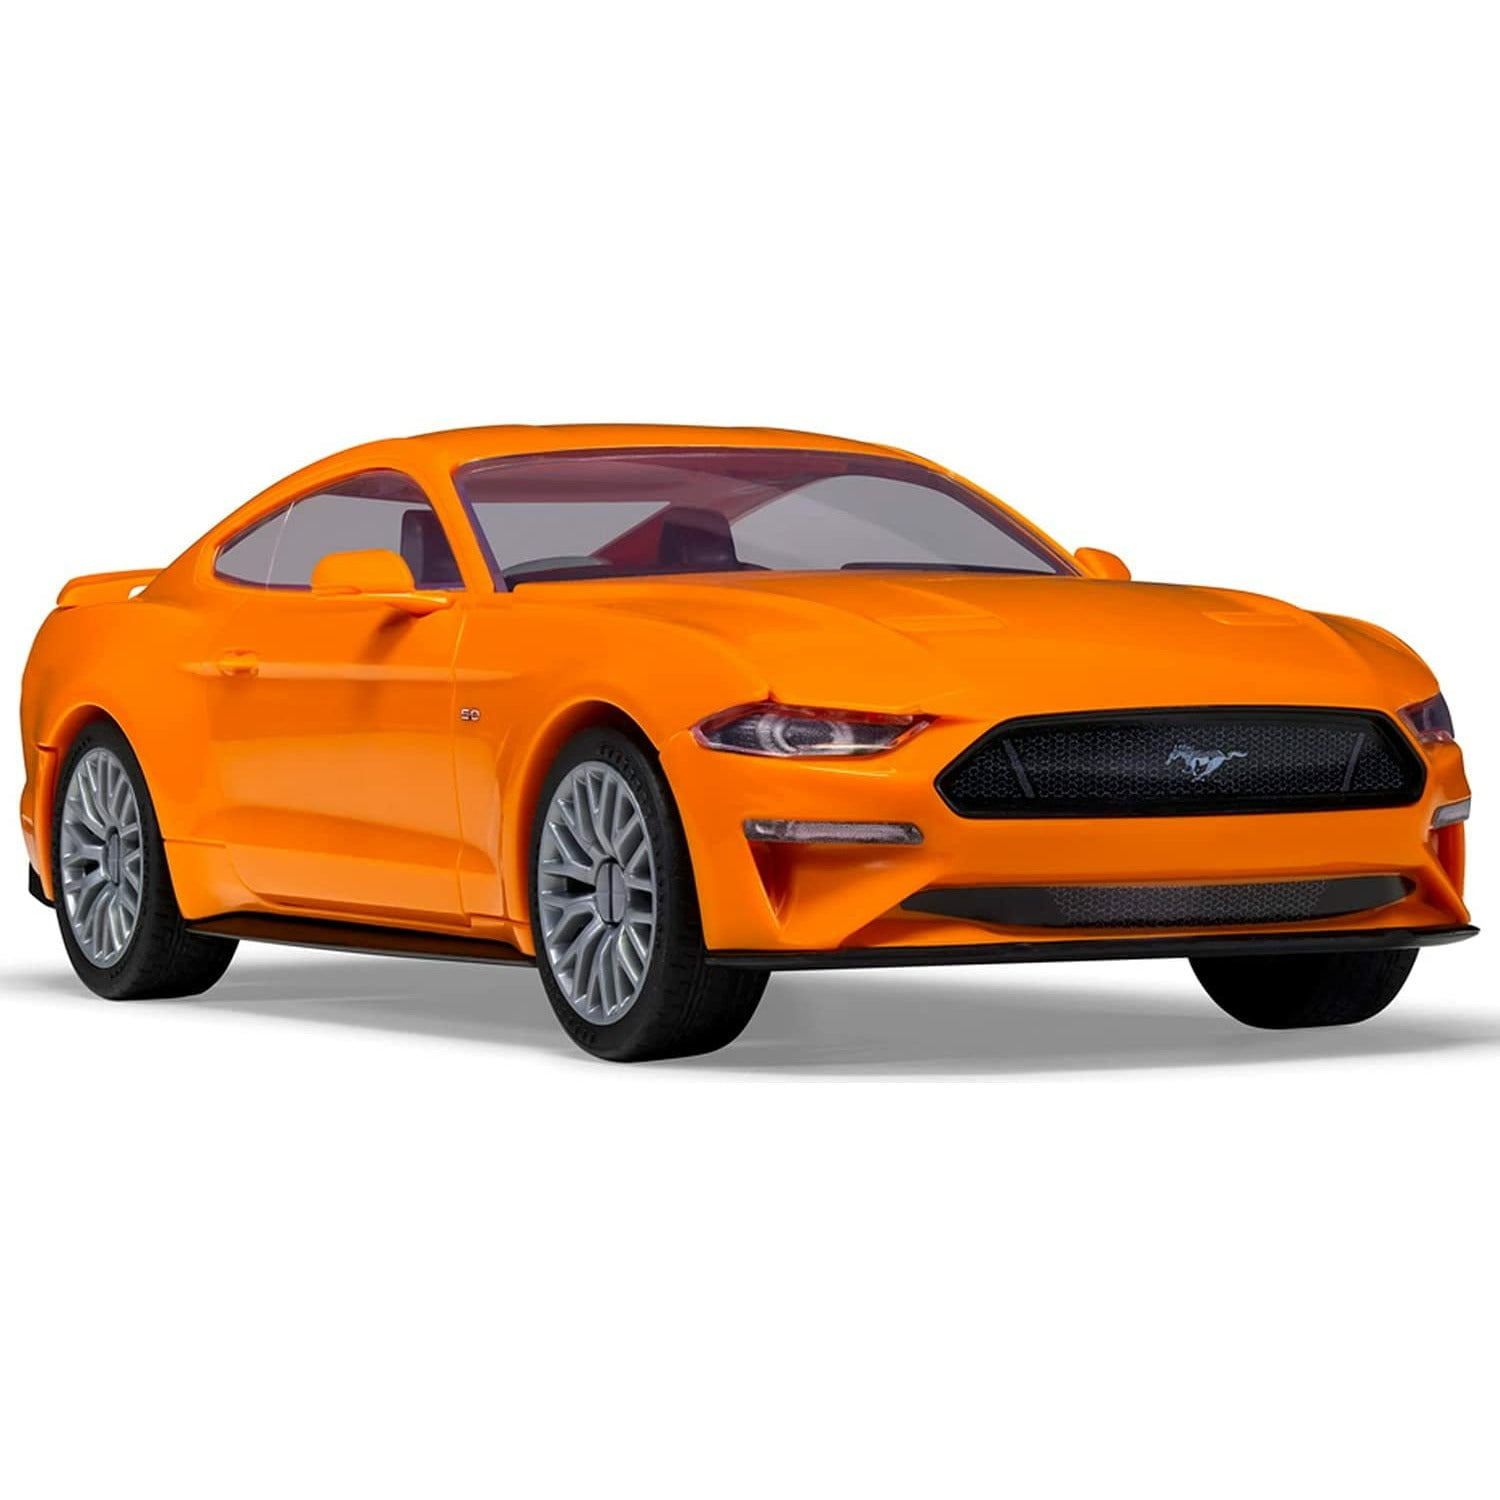  Airfix Quickbuild Ford Mustang GT Brick Building Plastic Model  Kit Car J6036,Orange : Arts, Crafts & Sewing